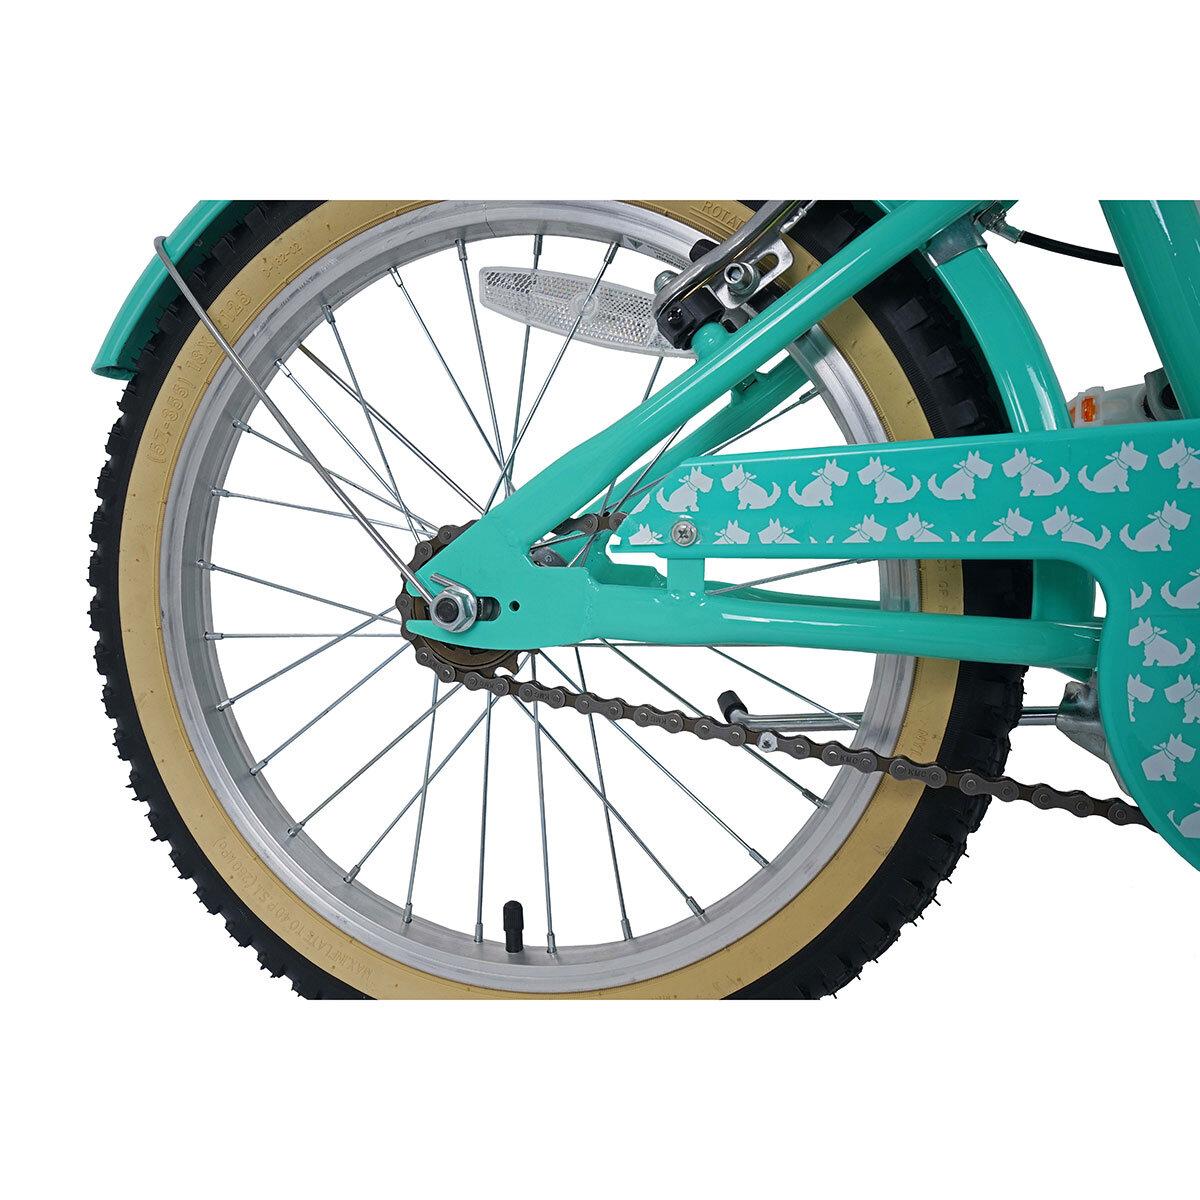 Dawes Lil Duchess Junior Bike 18" Wheel (11" Frame) in Turquoise